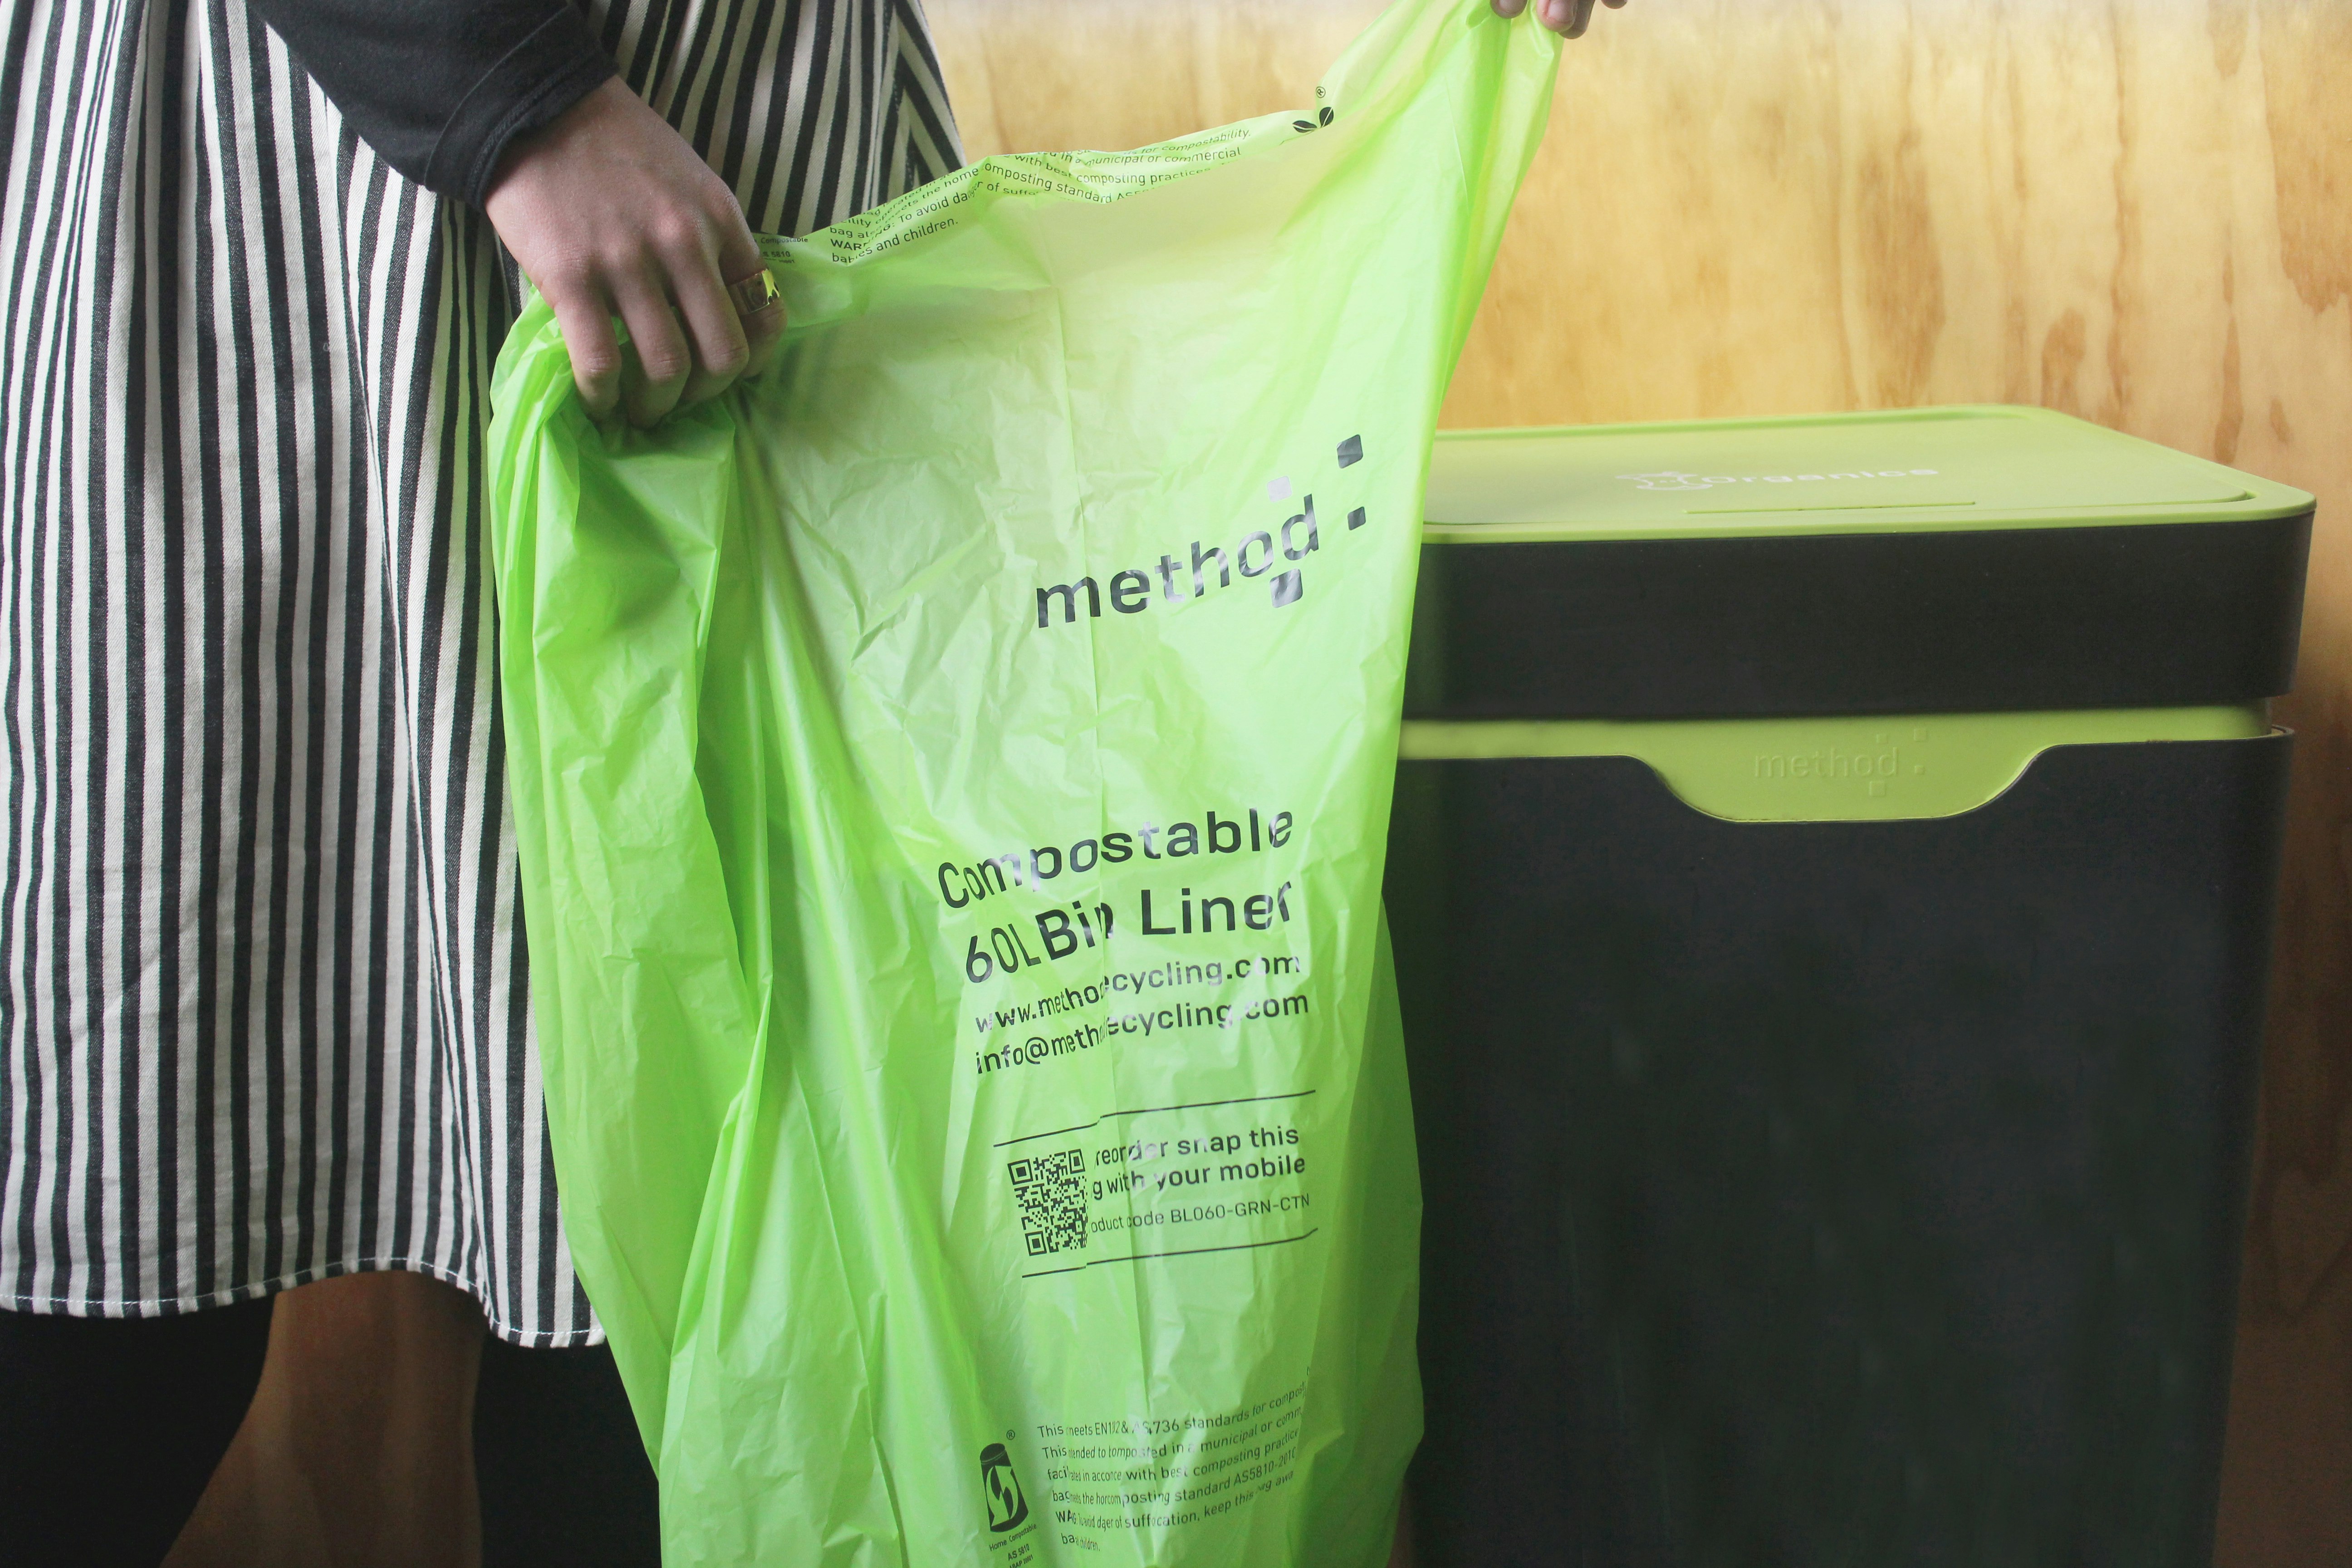 Biodegradable compostable bags 60L, Smart Cycle, 10 pcs